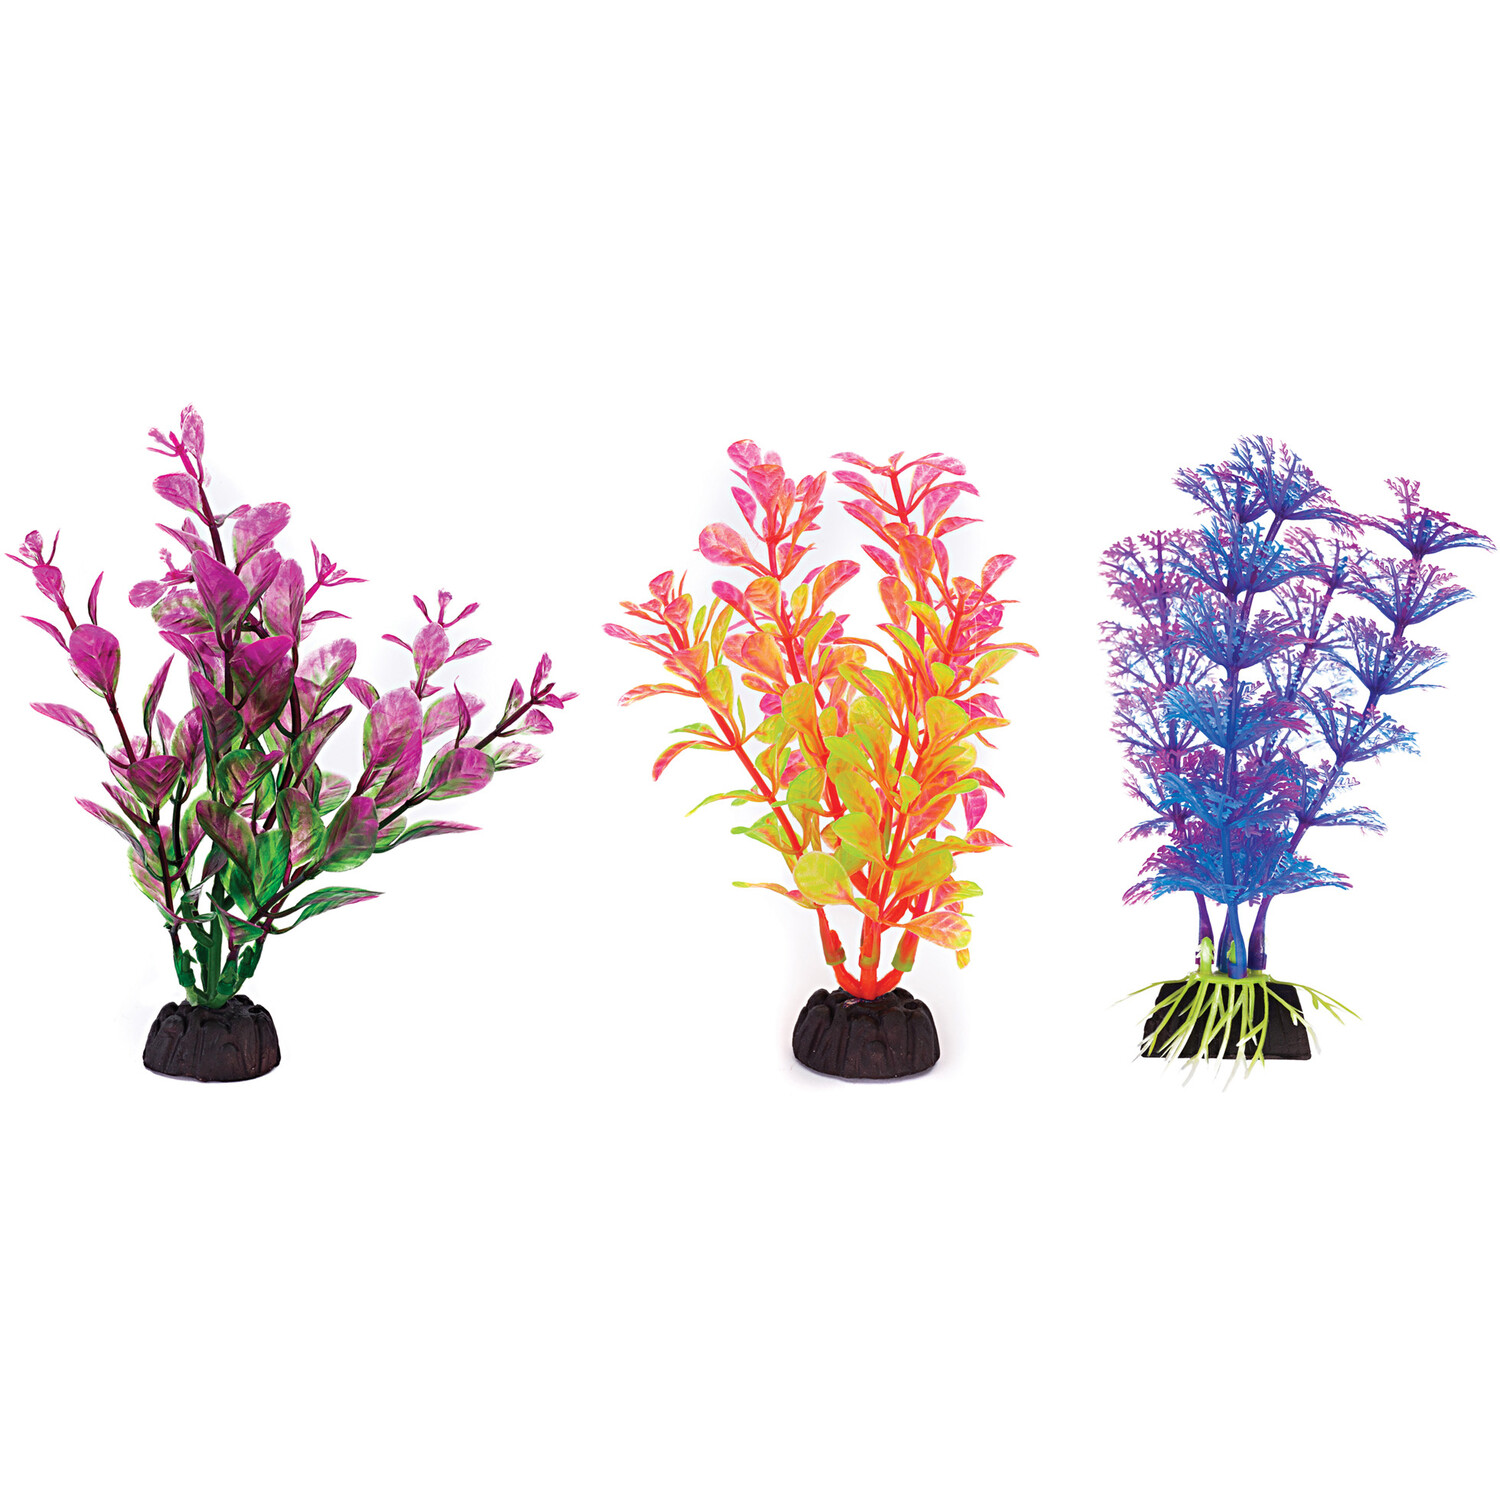 Pack of 6 4" Plastic Plants - Multicolour Image 2